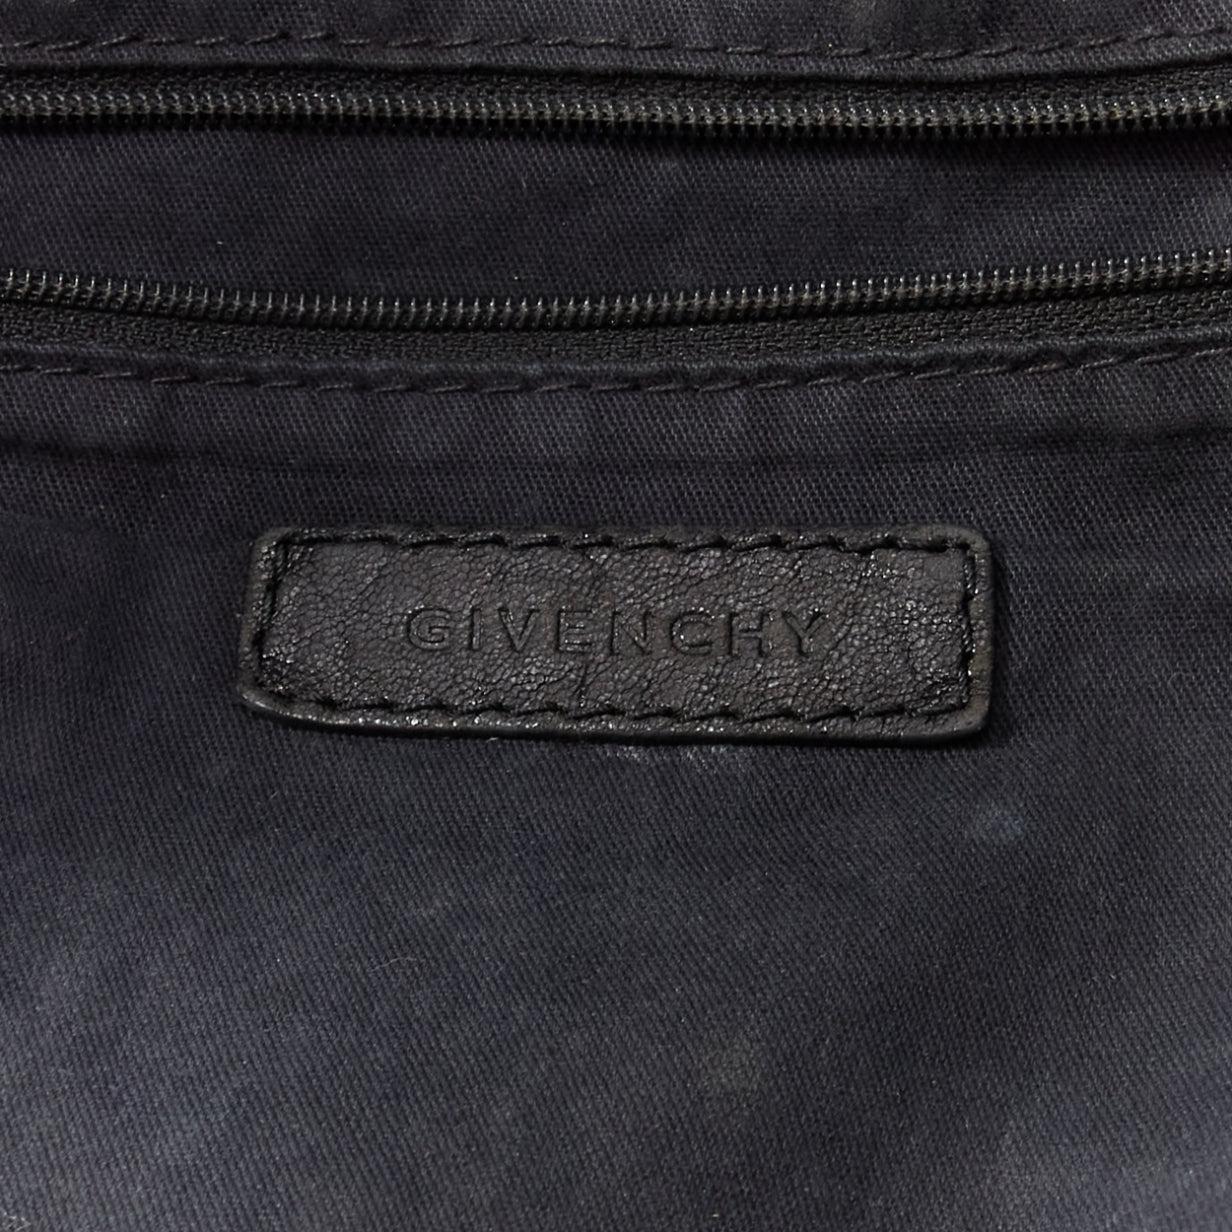 GIVENCHY Nightingale black textured leather silver totem logo shoulder tote bag For Sale 7